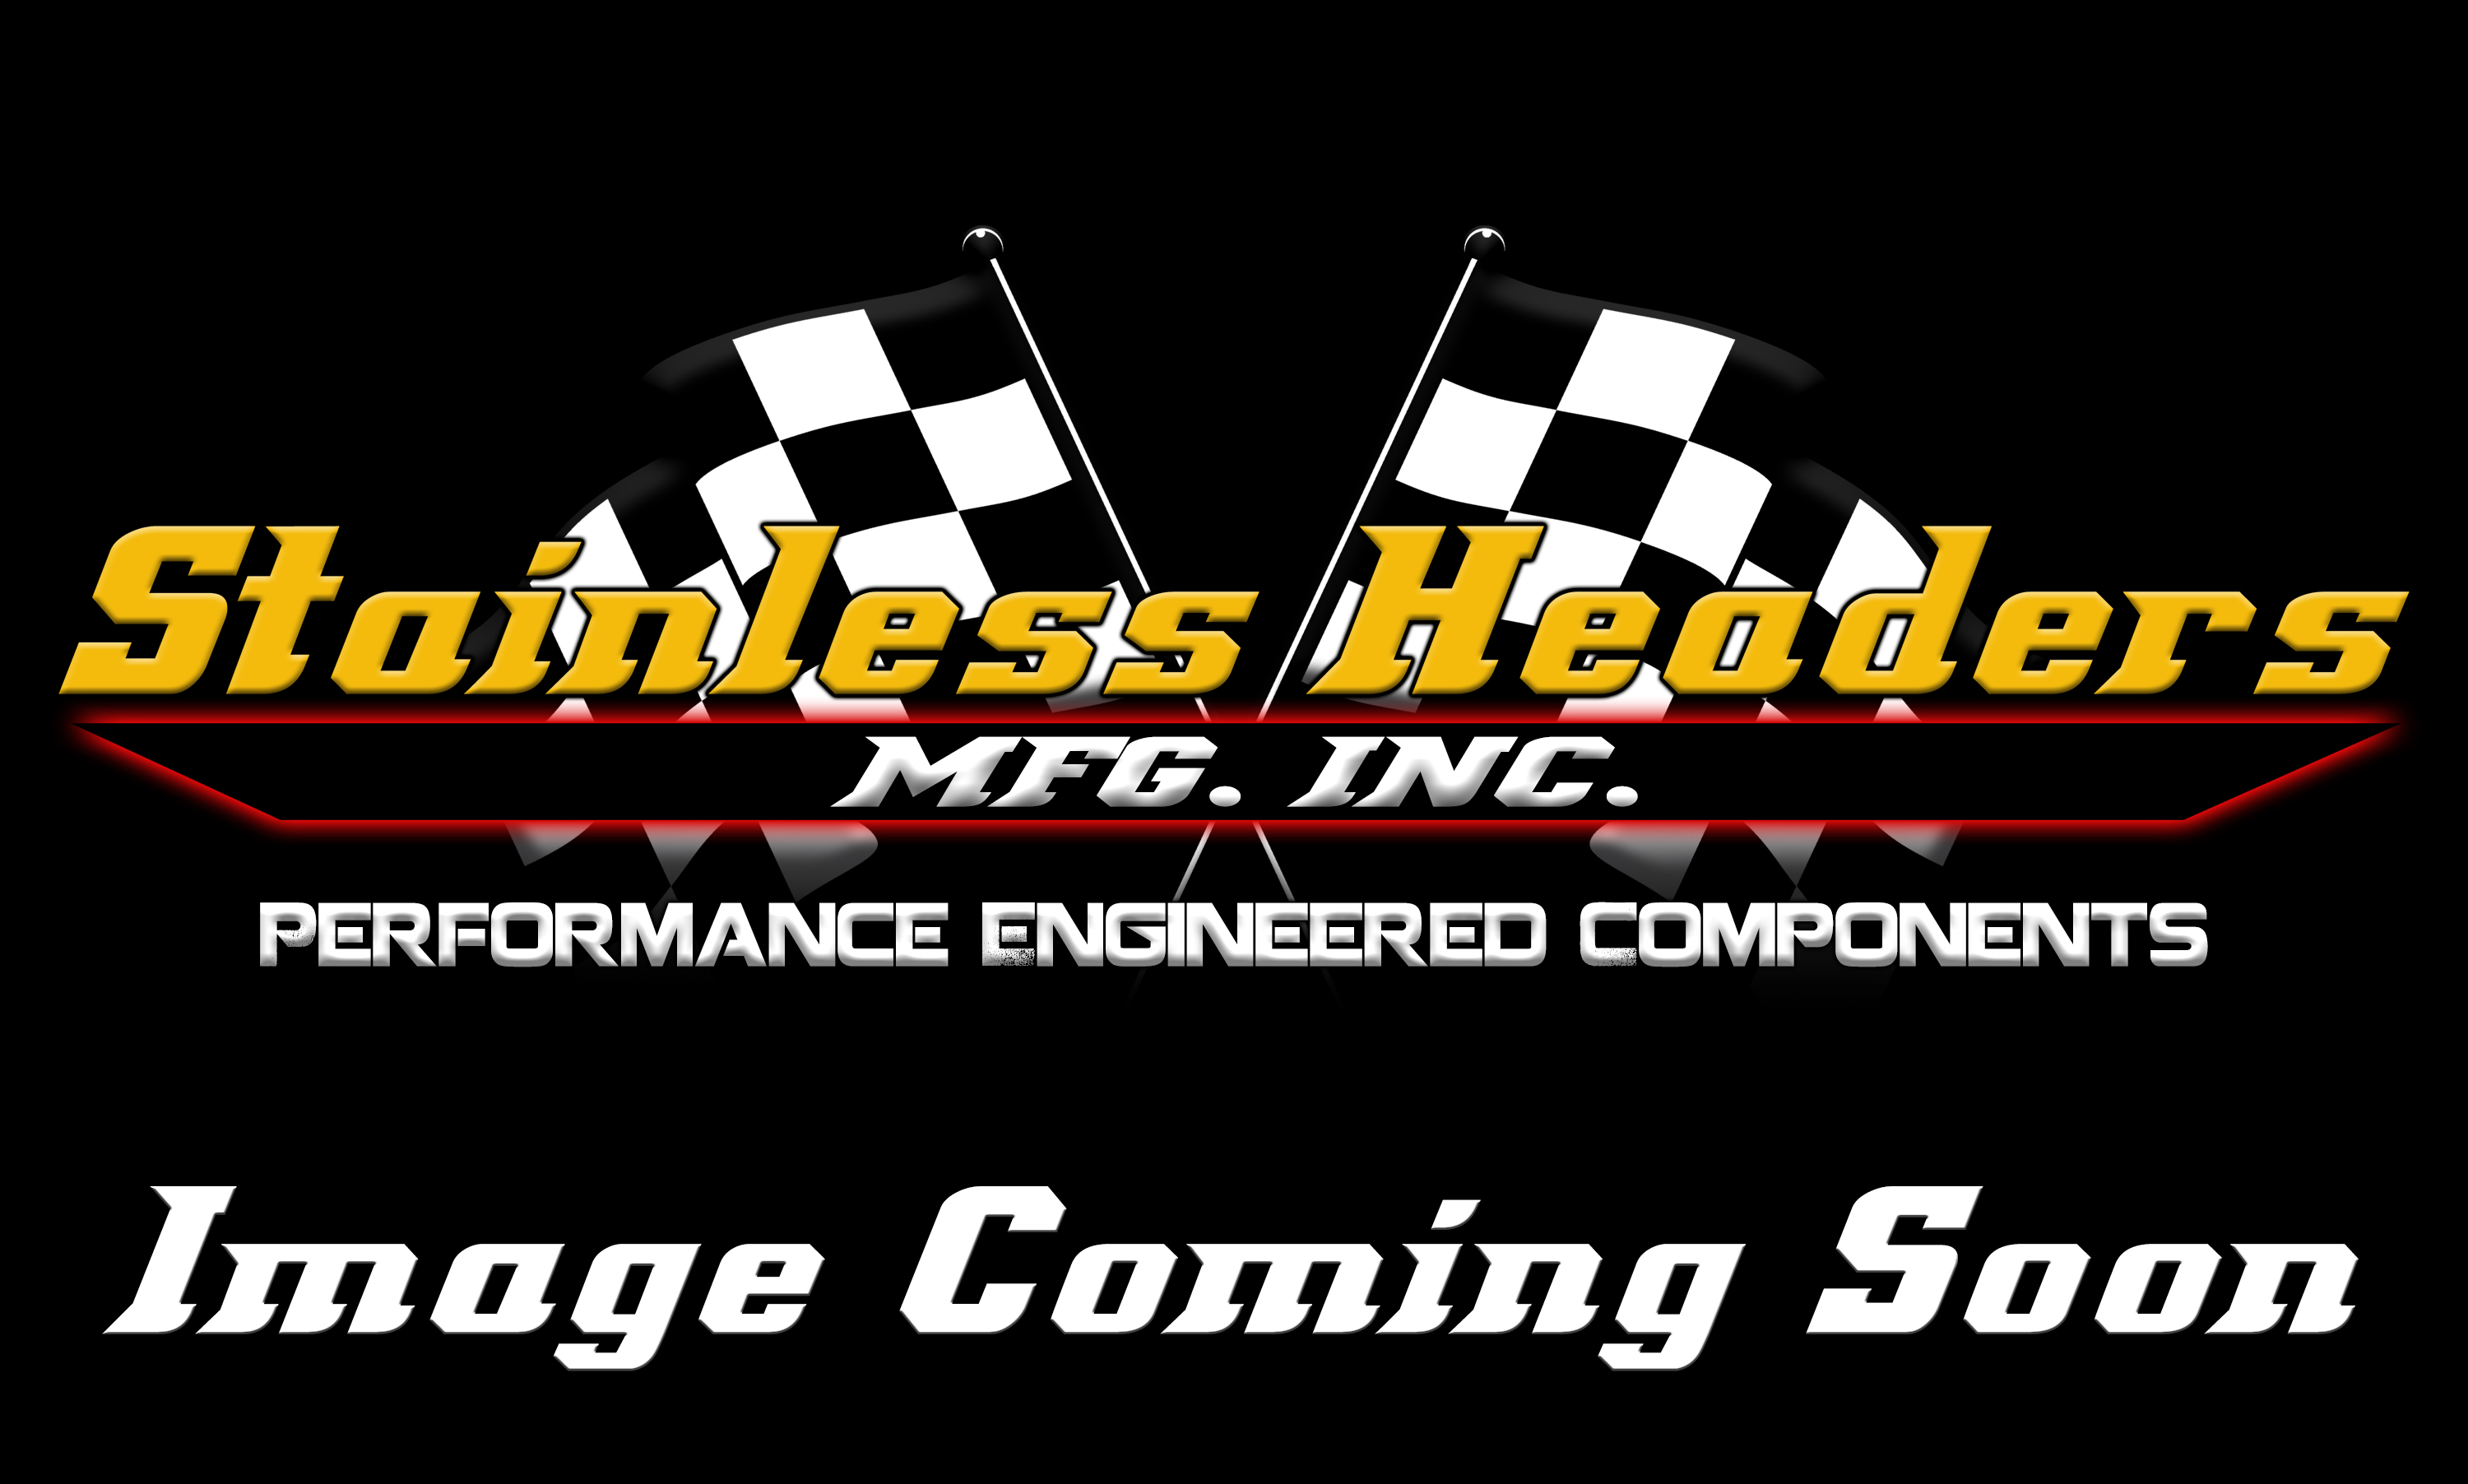 Stainless Headers - Buick 455 Custom Header Build Kit - Image 1